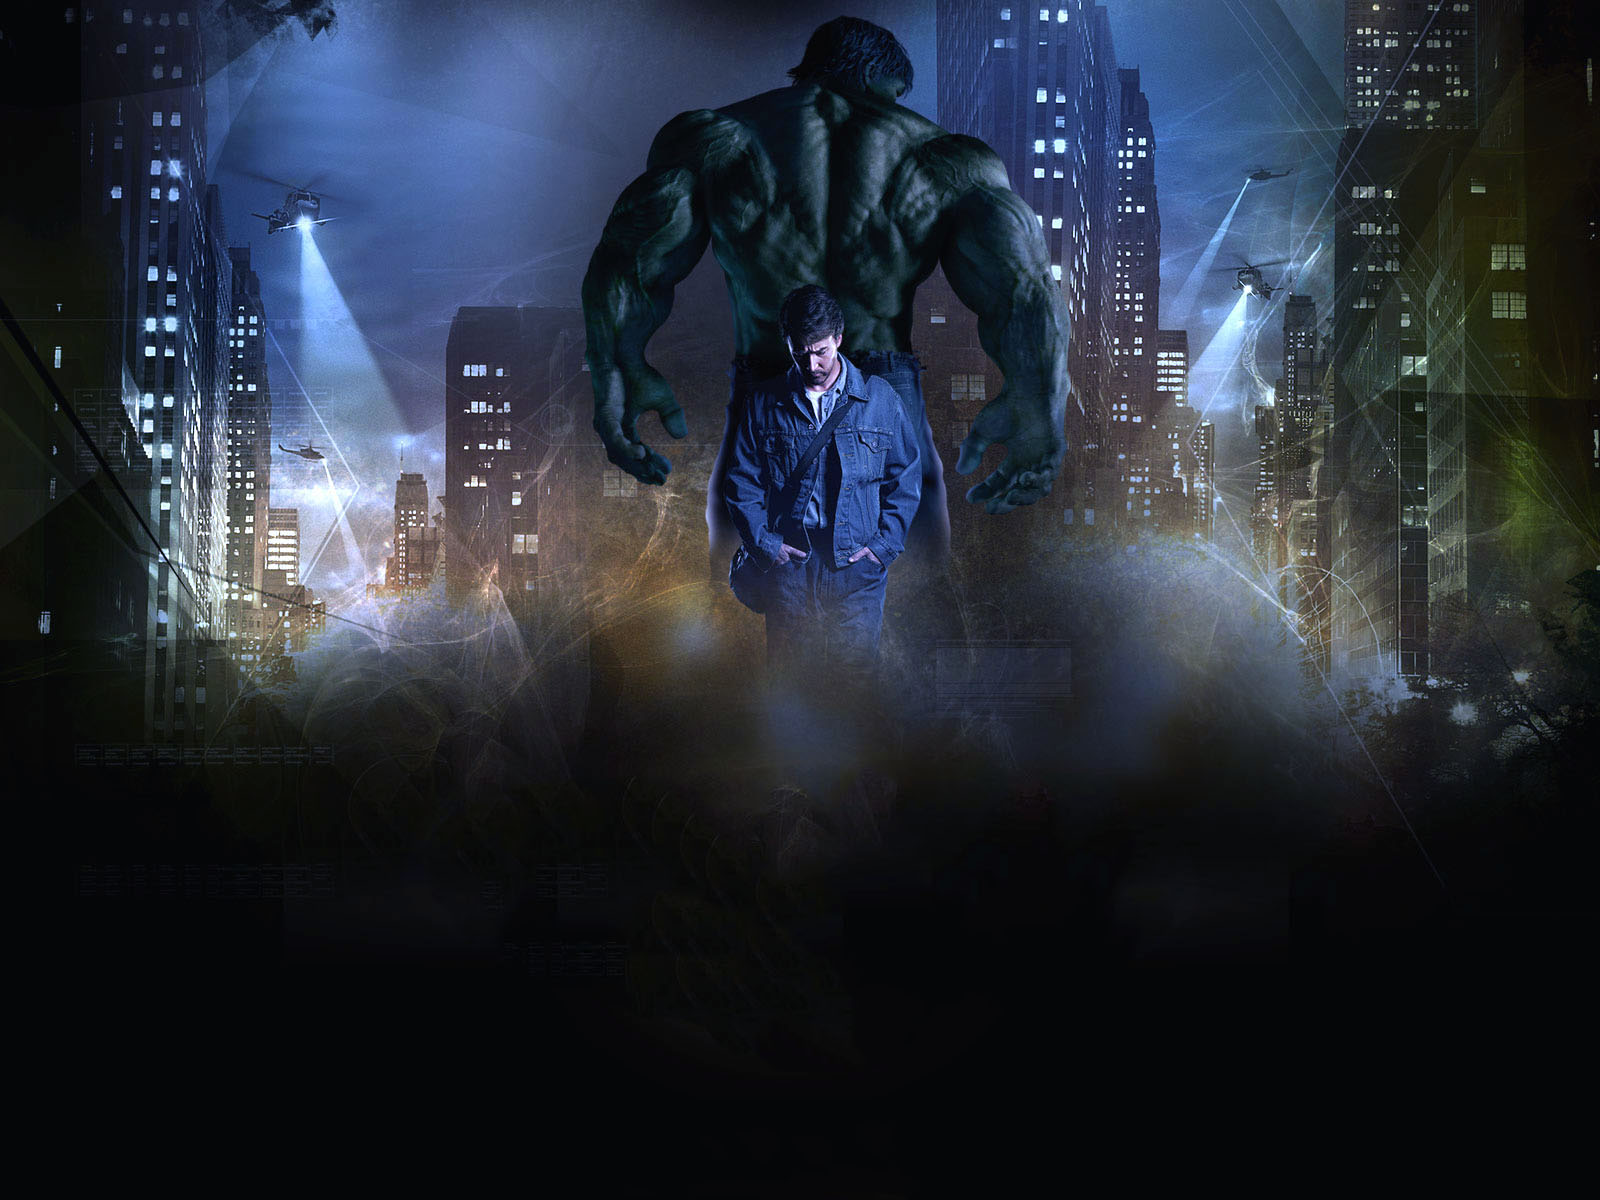 movie, the incredible hulk